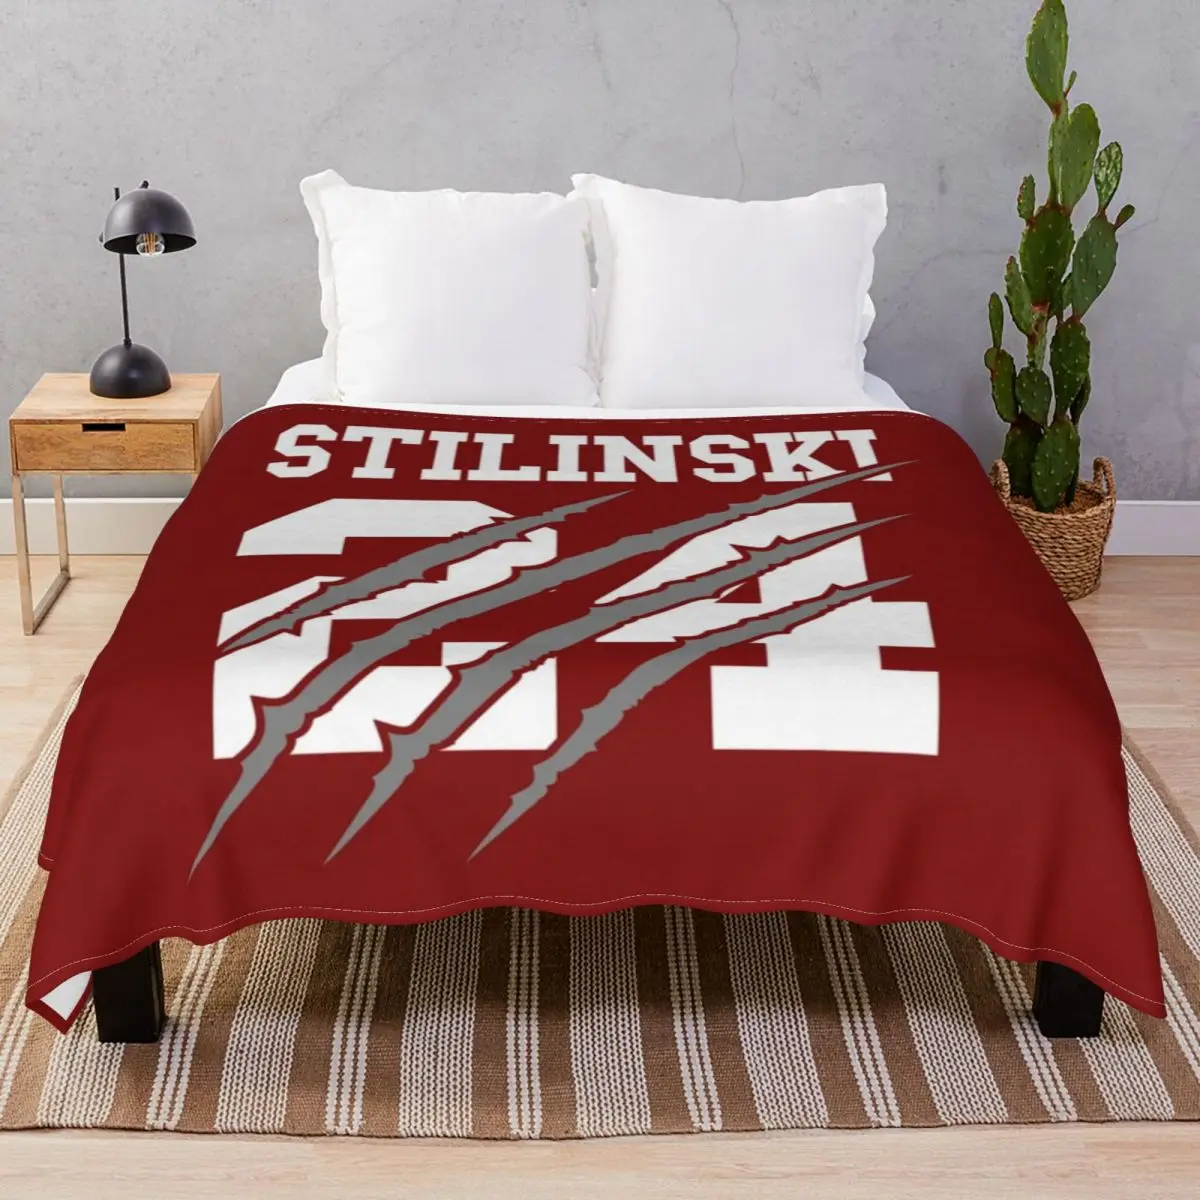 

Одеяло Stilinski из кораллового флиса, супертеплая летняя накидка, 24 предмета, для кровати, дома, дивана, путешествий, кинотеатра